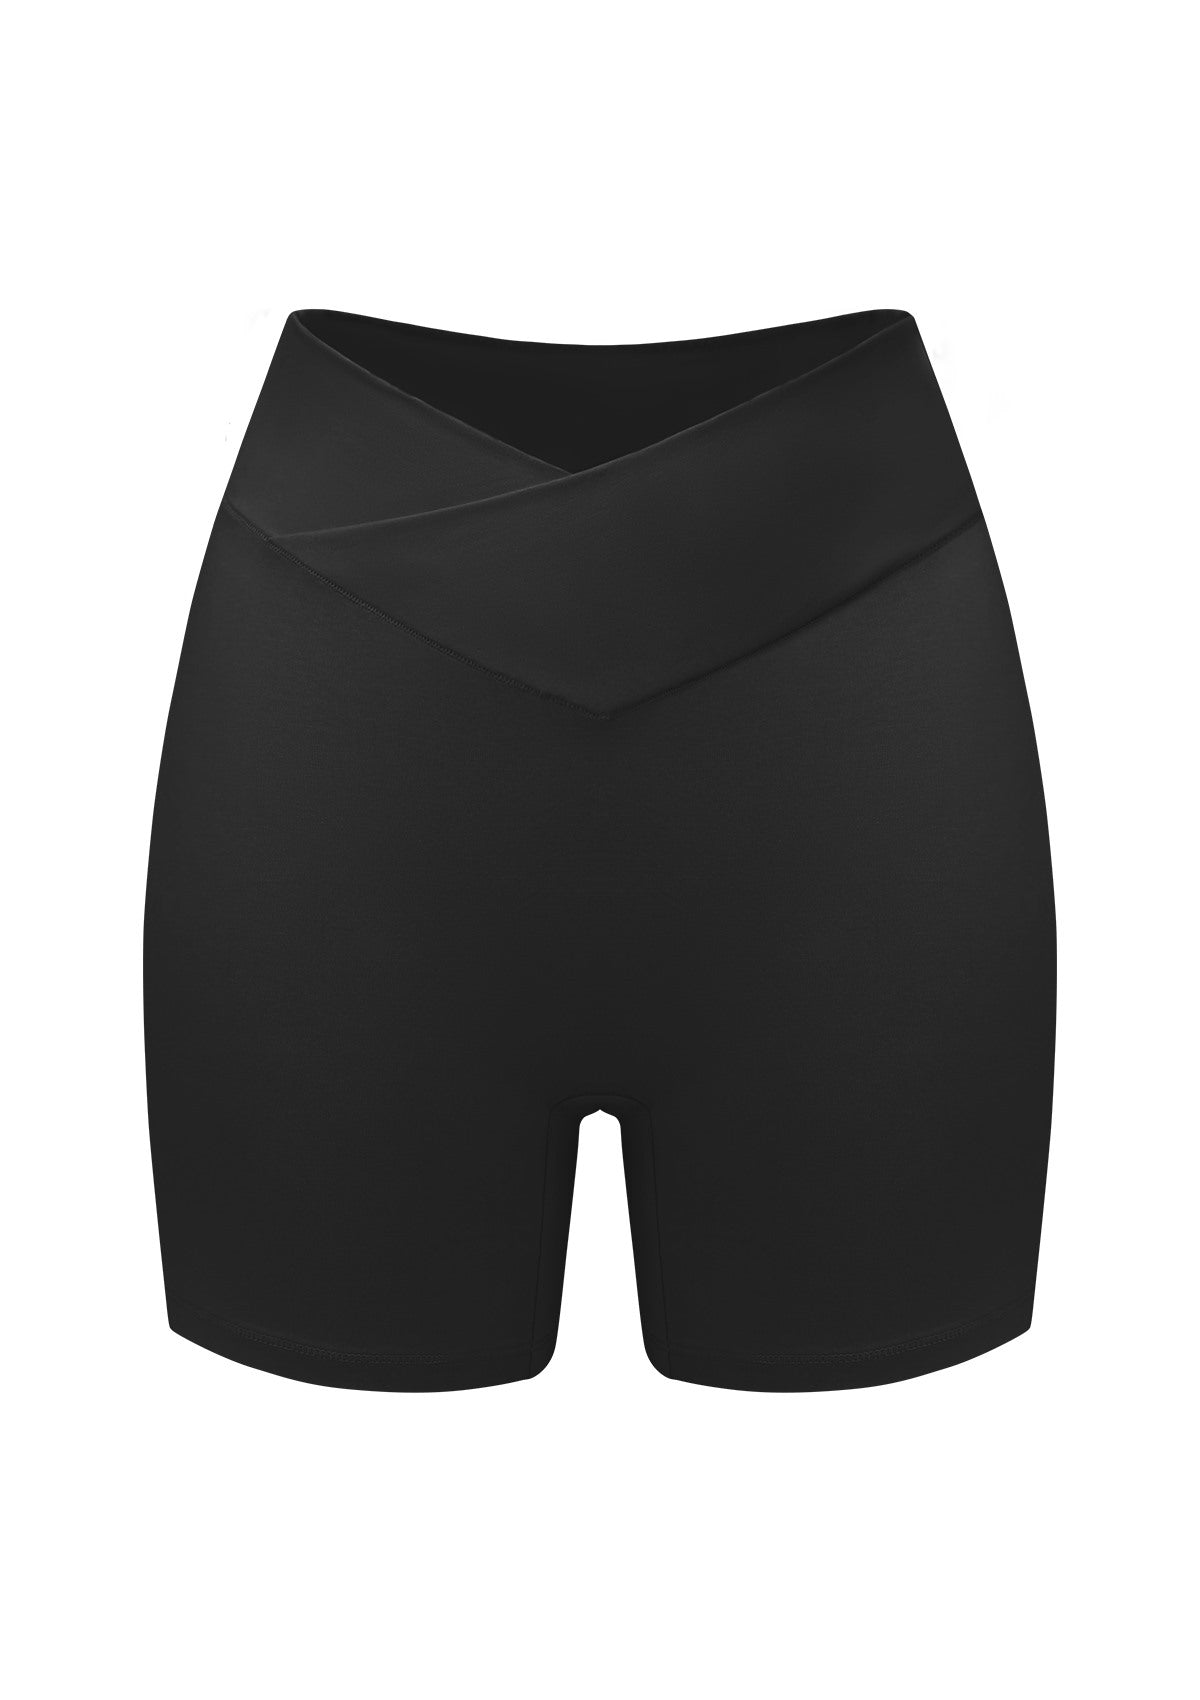 All-Day Comfort High-Rise Cotton Boyshorts Underwear 3 Pack - L / Black+White+Beige